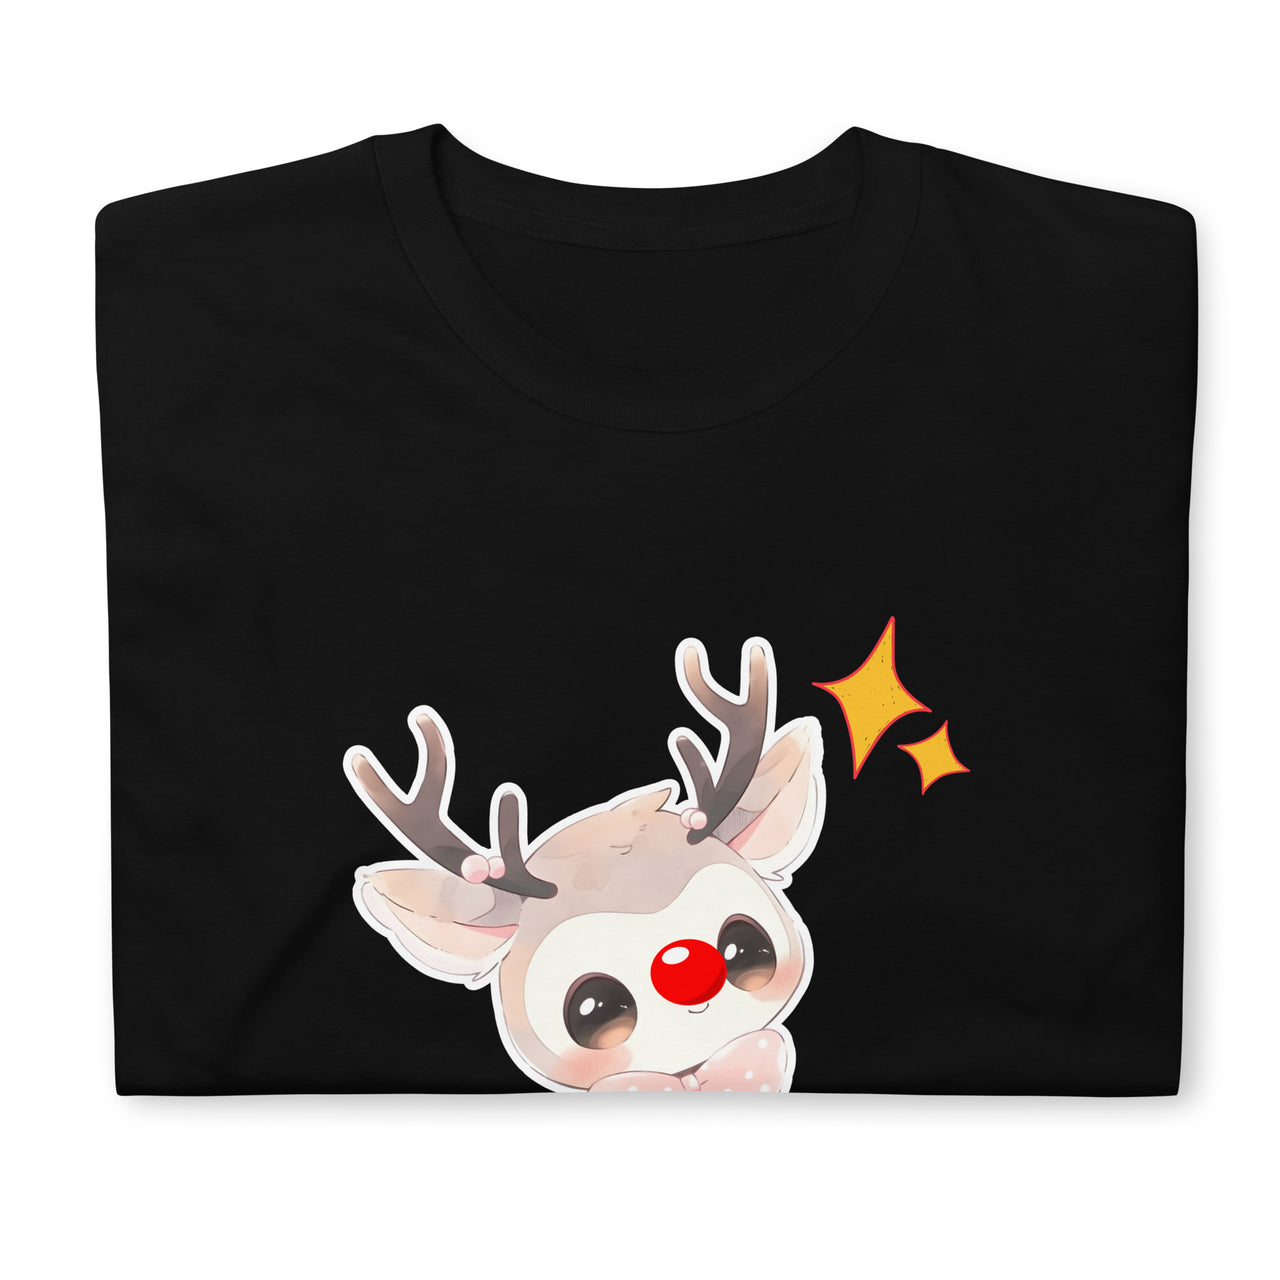 Kawaii Reindeer for a Japanese Christmas T-Shirt